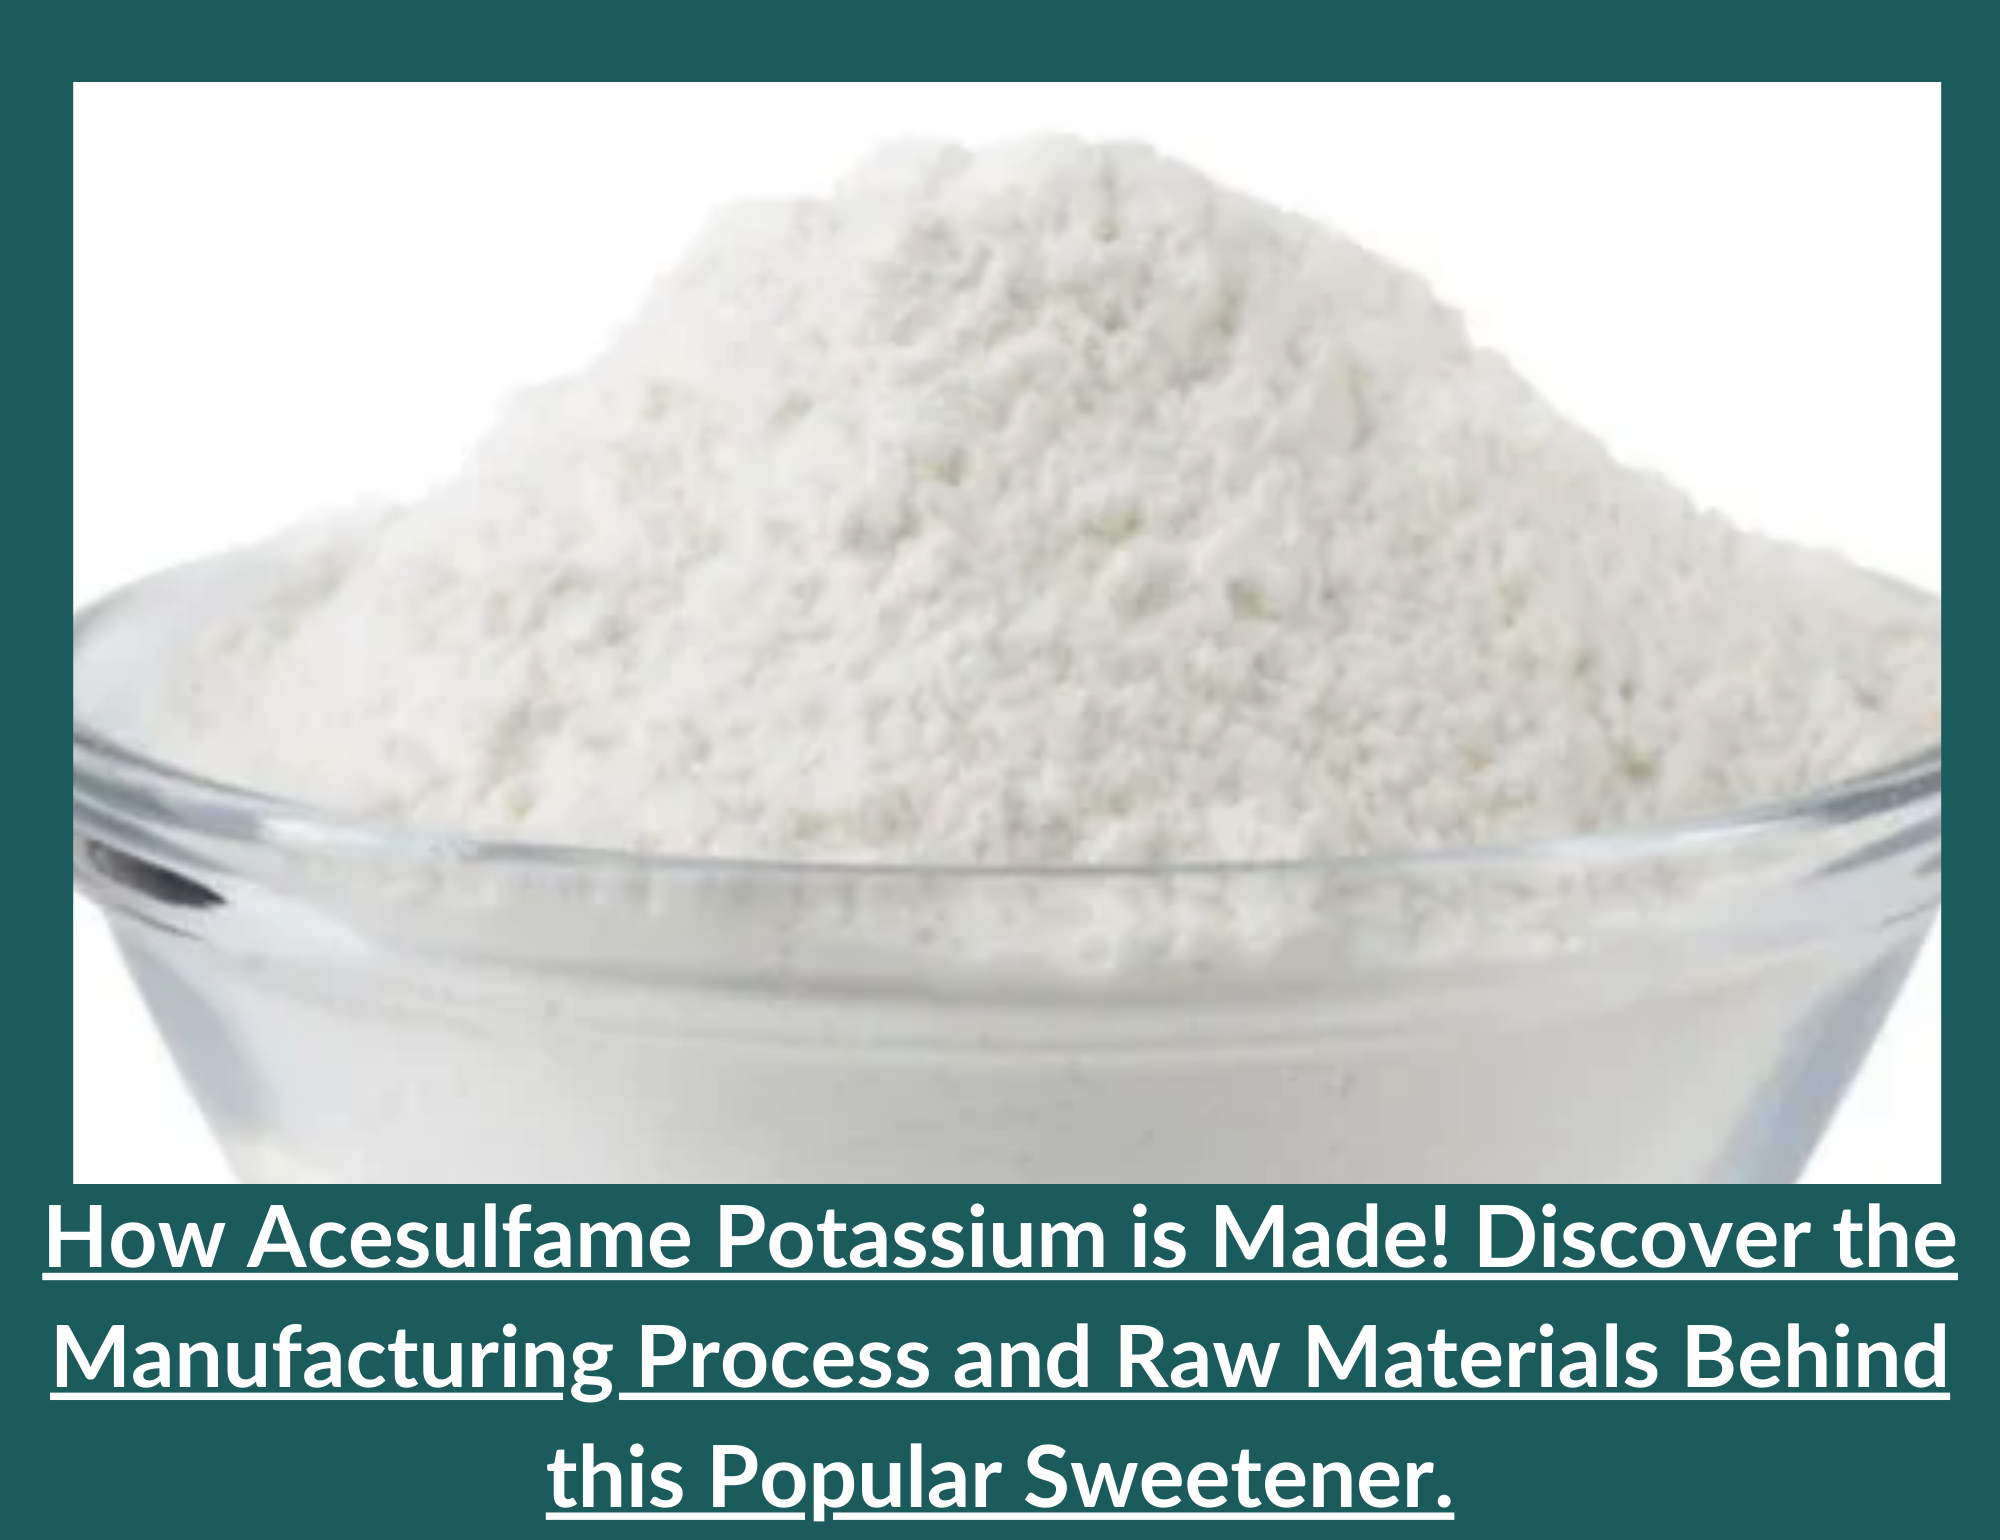 How Acesulfame Potassium is Made